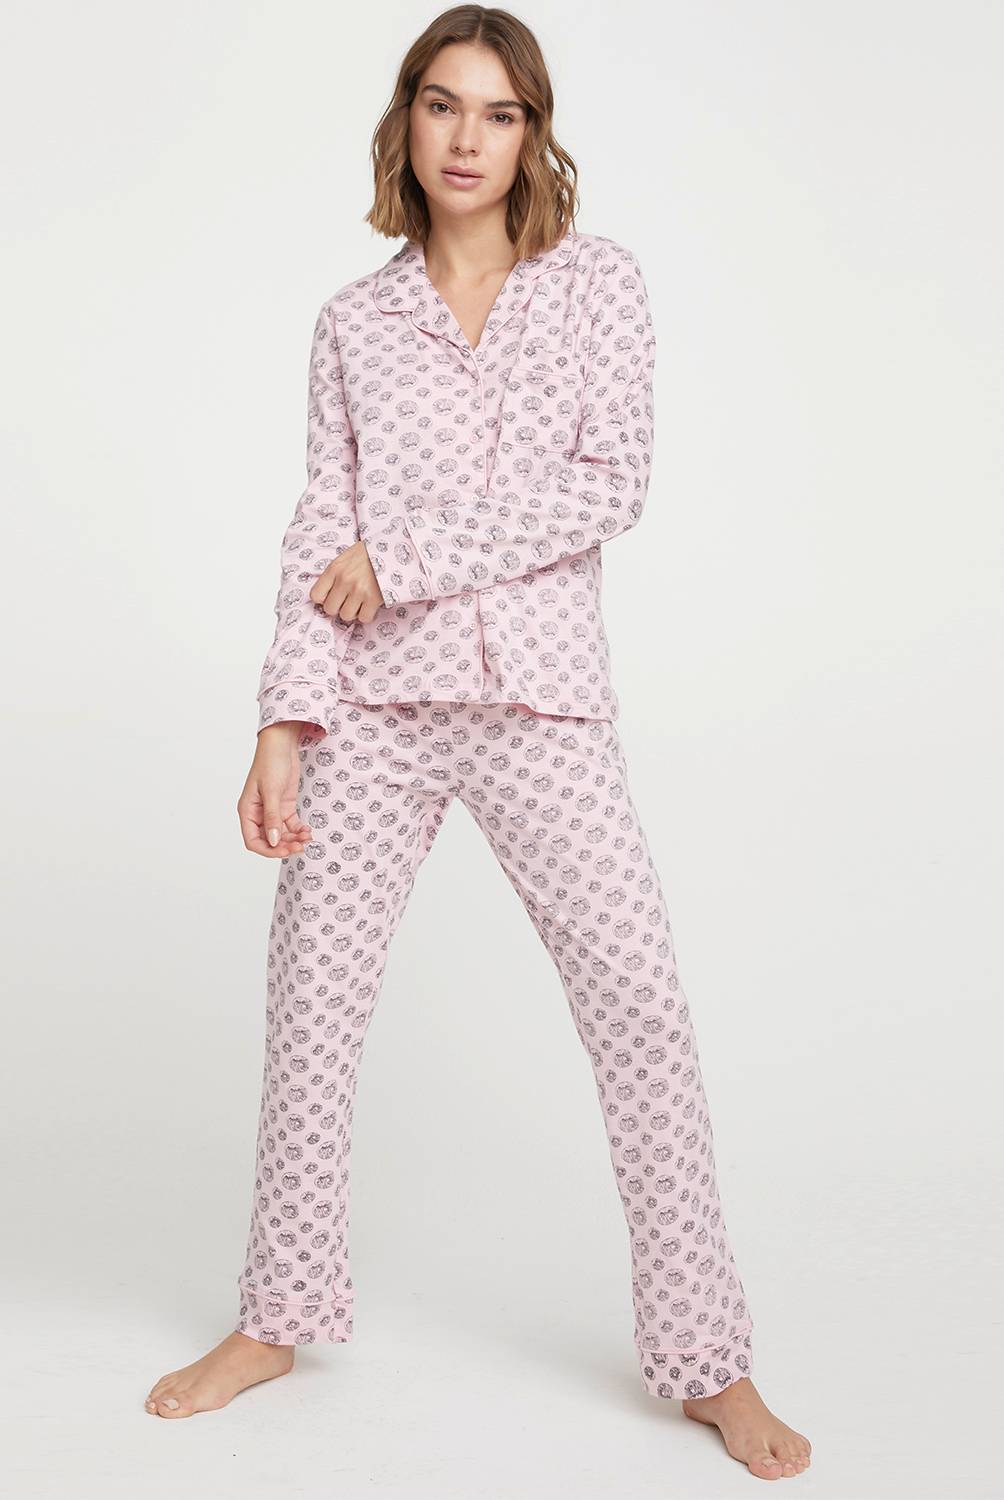 Sybilla Pijama Mujer | falabella.com